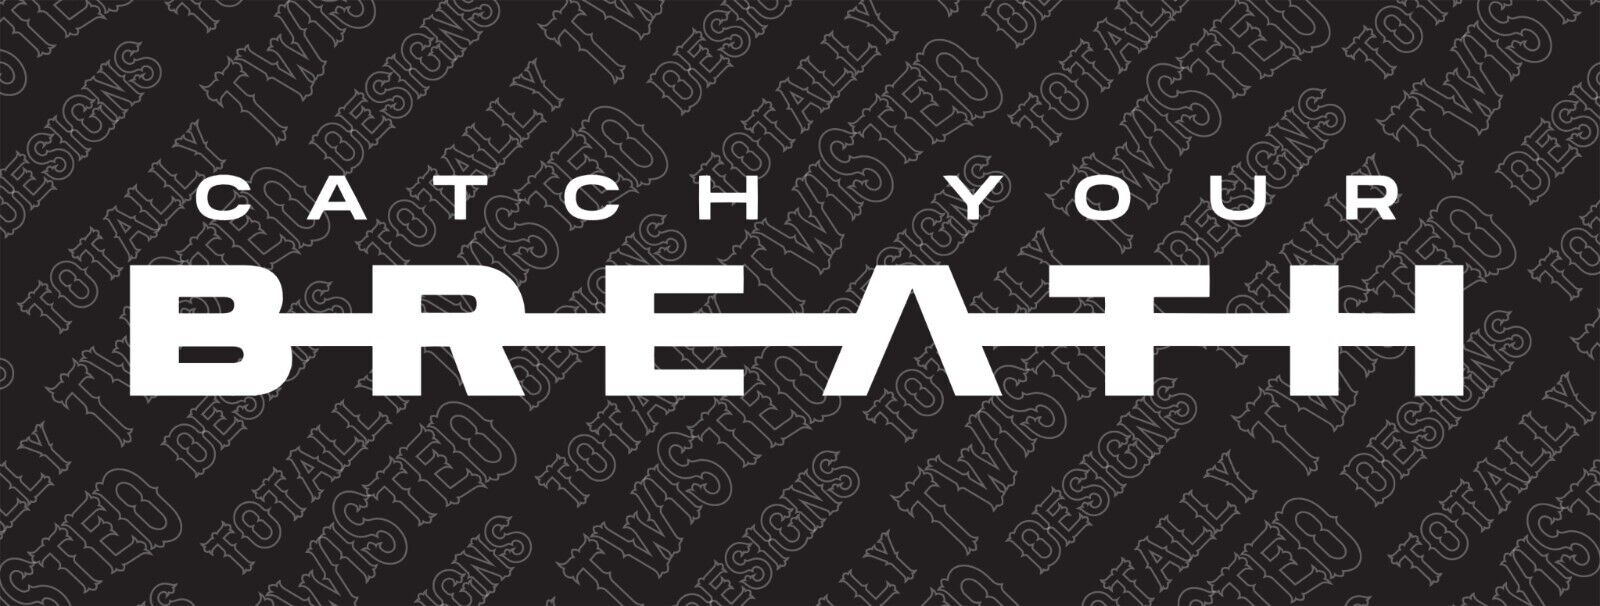 Catch Your Breath vinyl decal sticker Car Truck Hard Rock Band Logo Metal